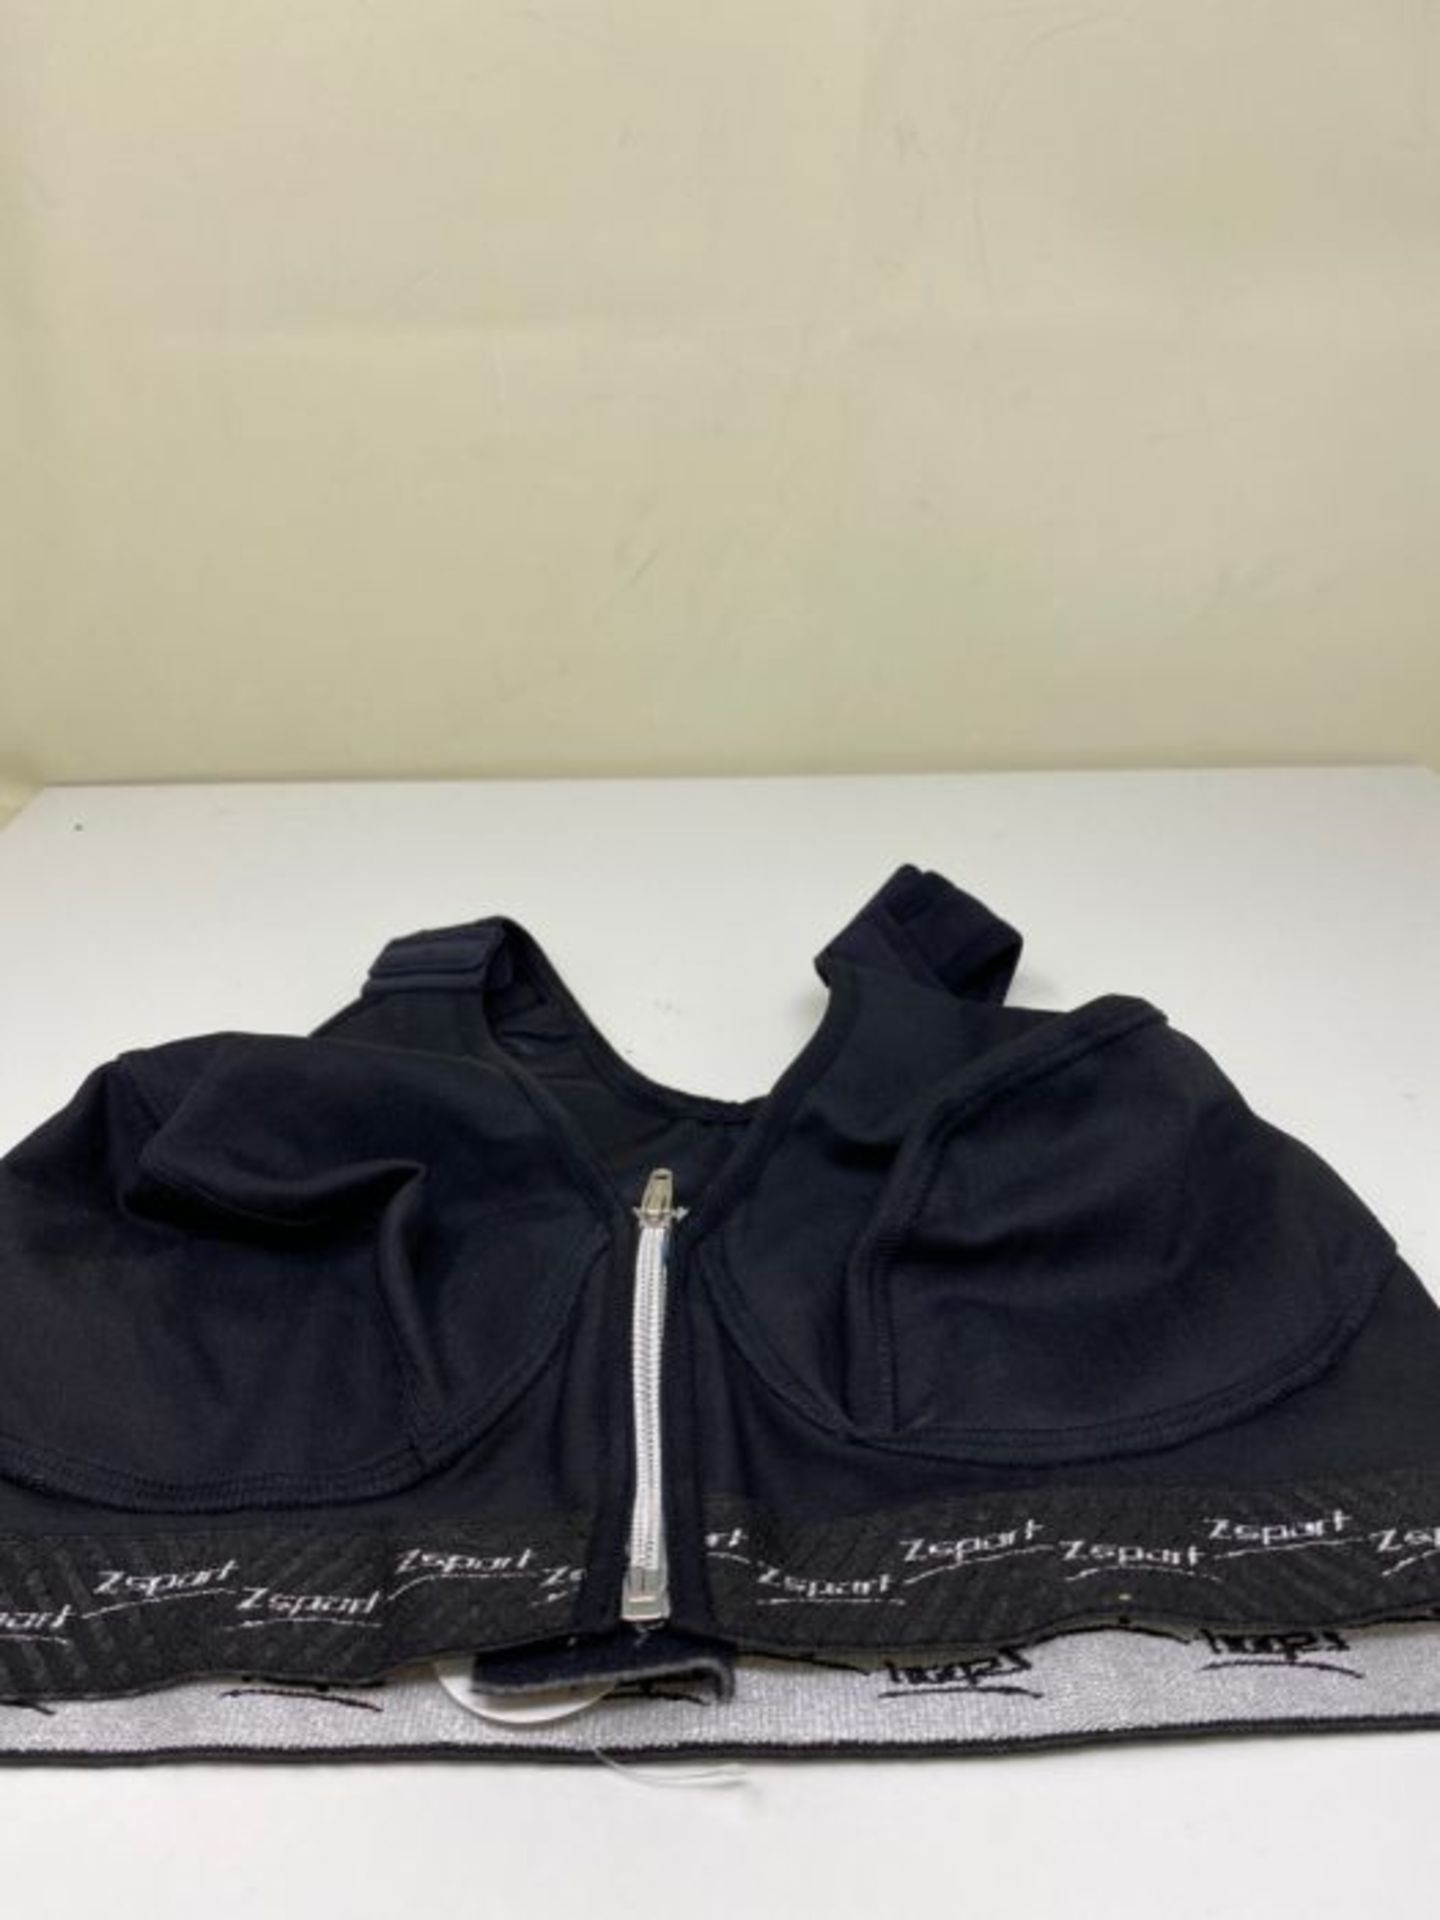 RRP £54.00 ZSPORT ladies Zbra Silver Bra black Size:38E (Manufacturer's Size: 100E) - Image 2 of 2